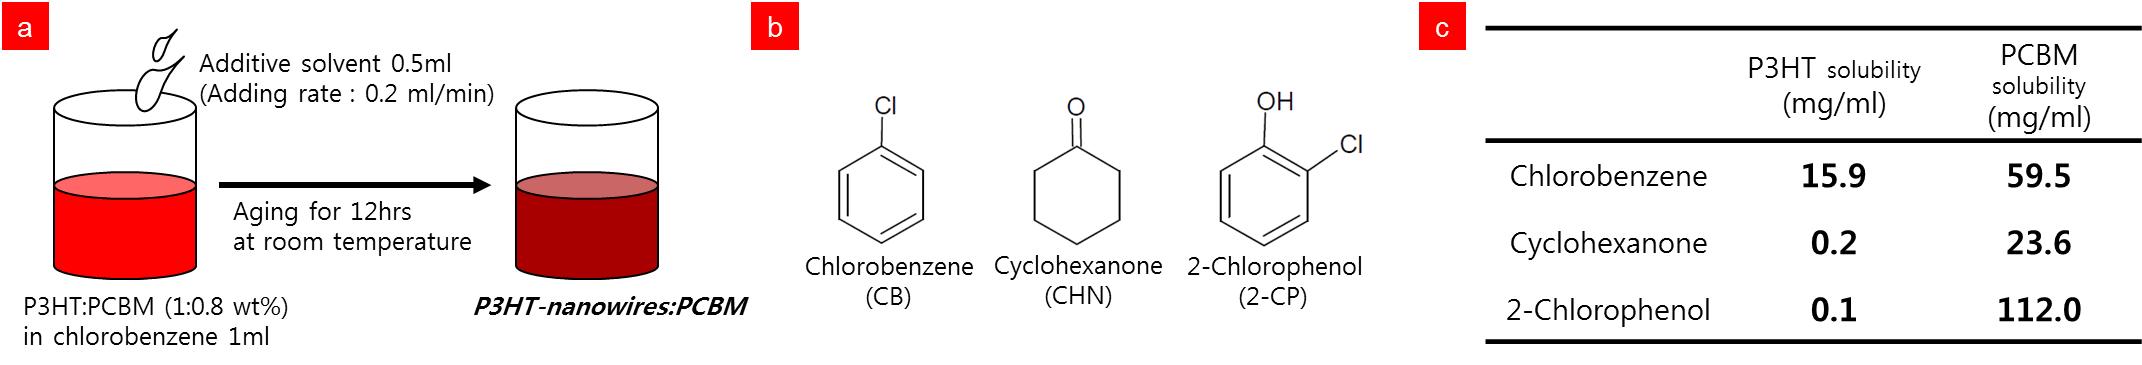 (a) 첨가제를 이용한 고분자 나노와이어 형성 방법, (b) 첨가제의 분자 구조, (c) P3HT와 PCBM의 용해도